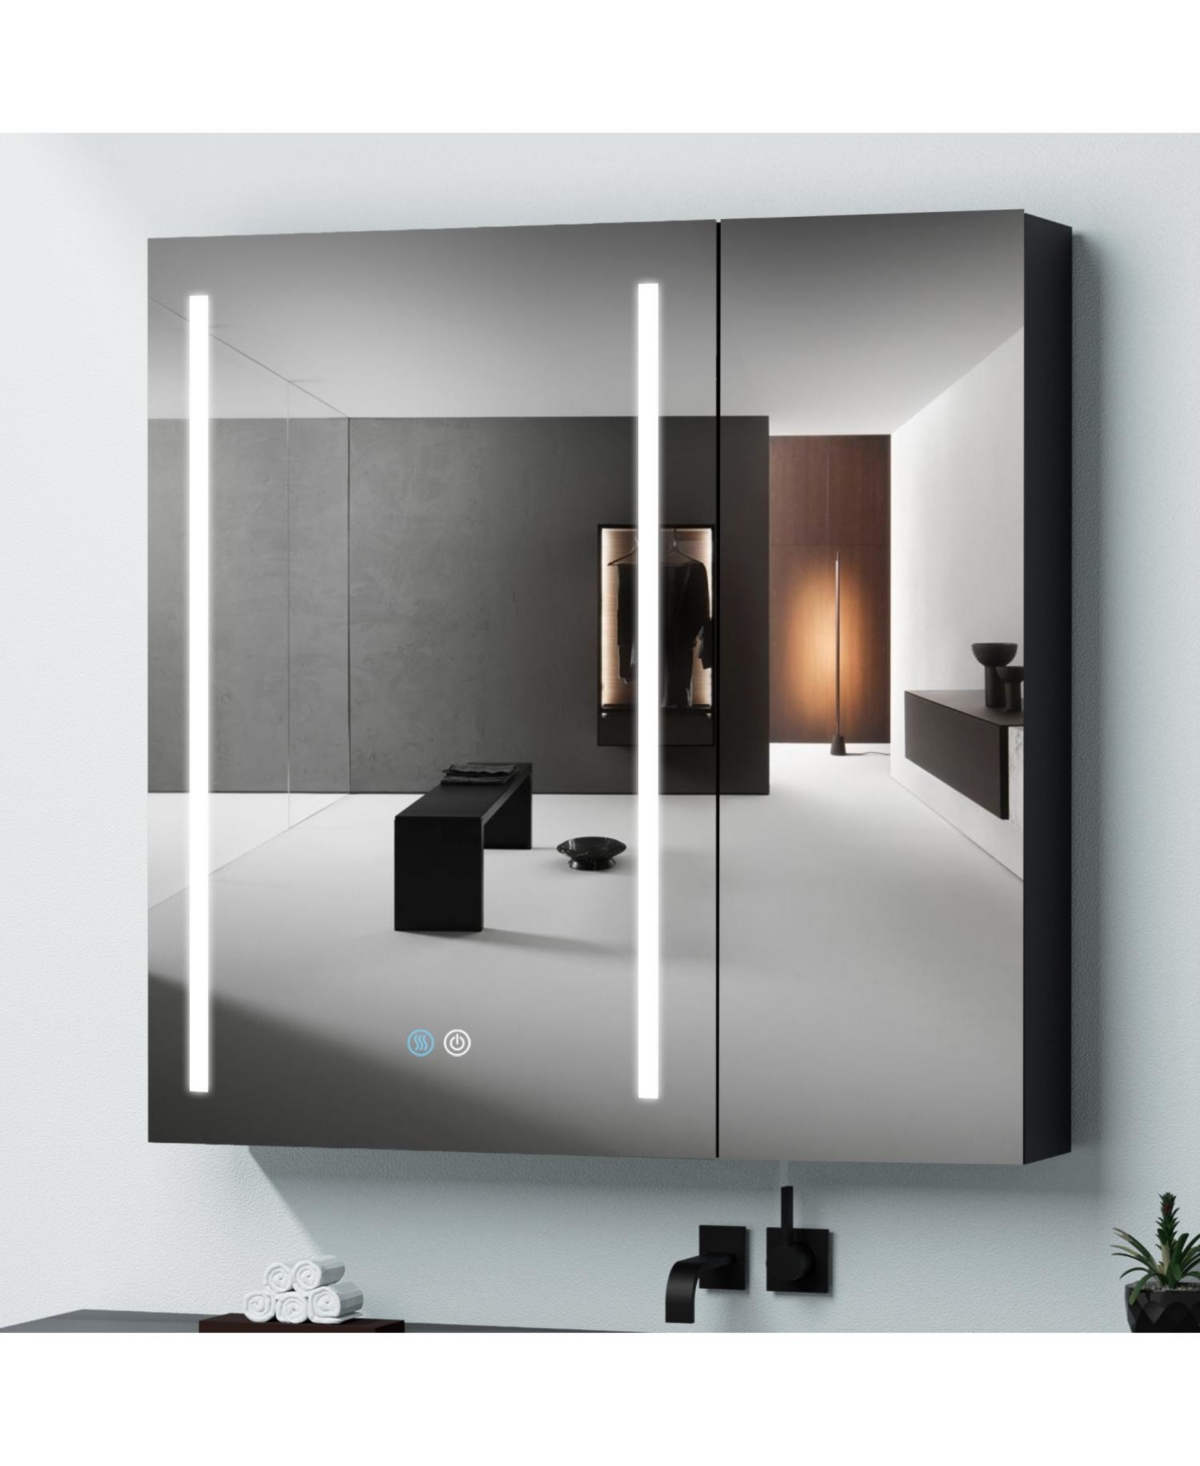 30x30 Inch Led Bathroom Medicine Cabinet Surface Mount Double Door Lighted Medicine Cabinet - Black